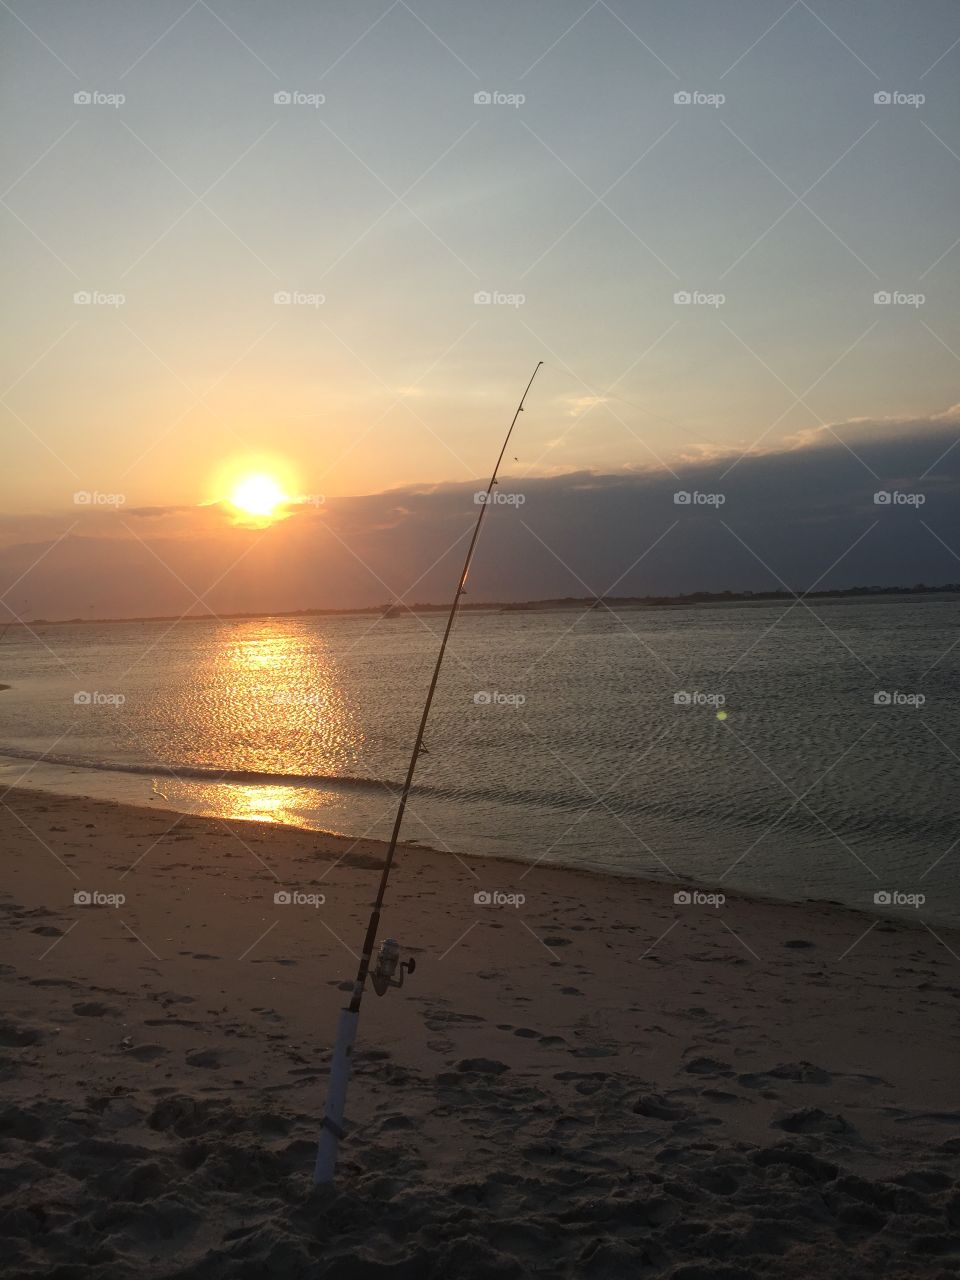 Artistic sunset fishing themed